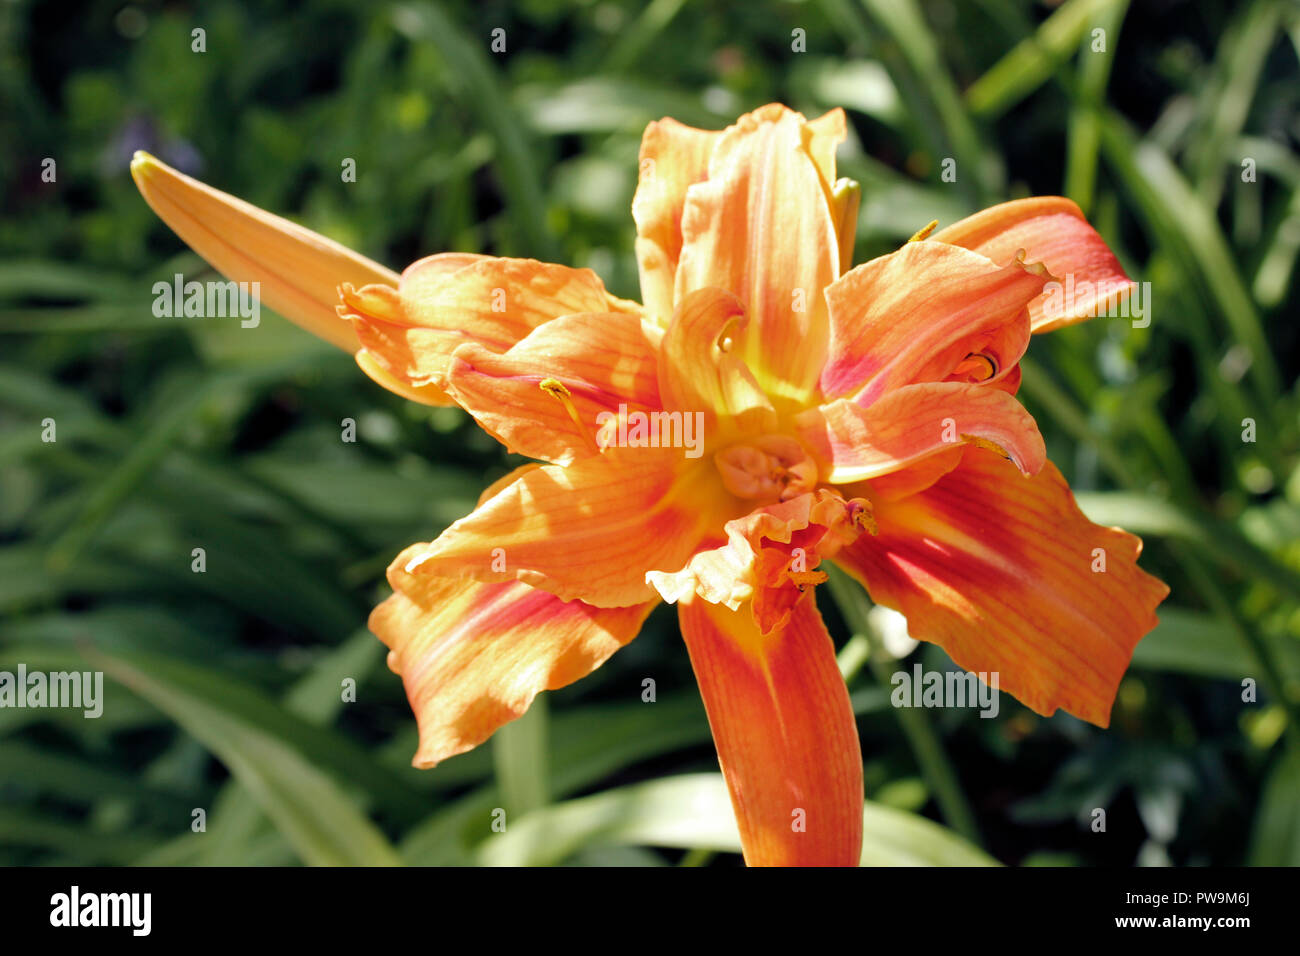 Open flower of Daylily - Hemerocallis Fulva Stock Photo